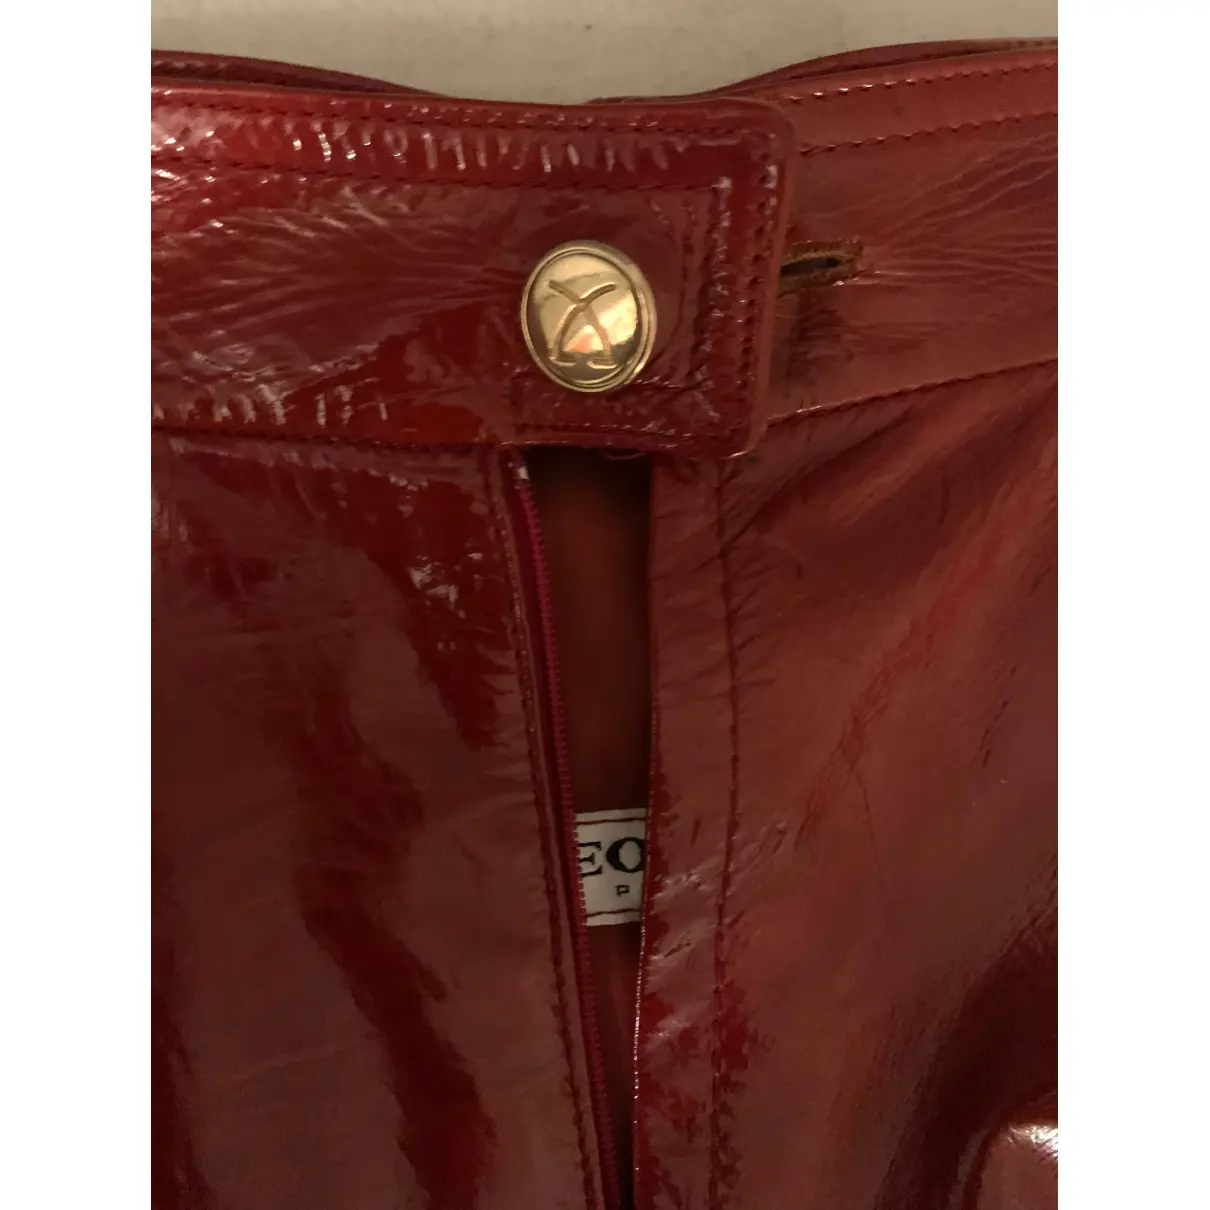 Patent leather mid-length skirt Leonard